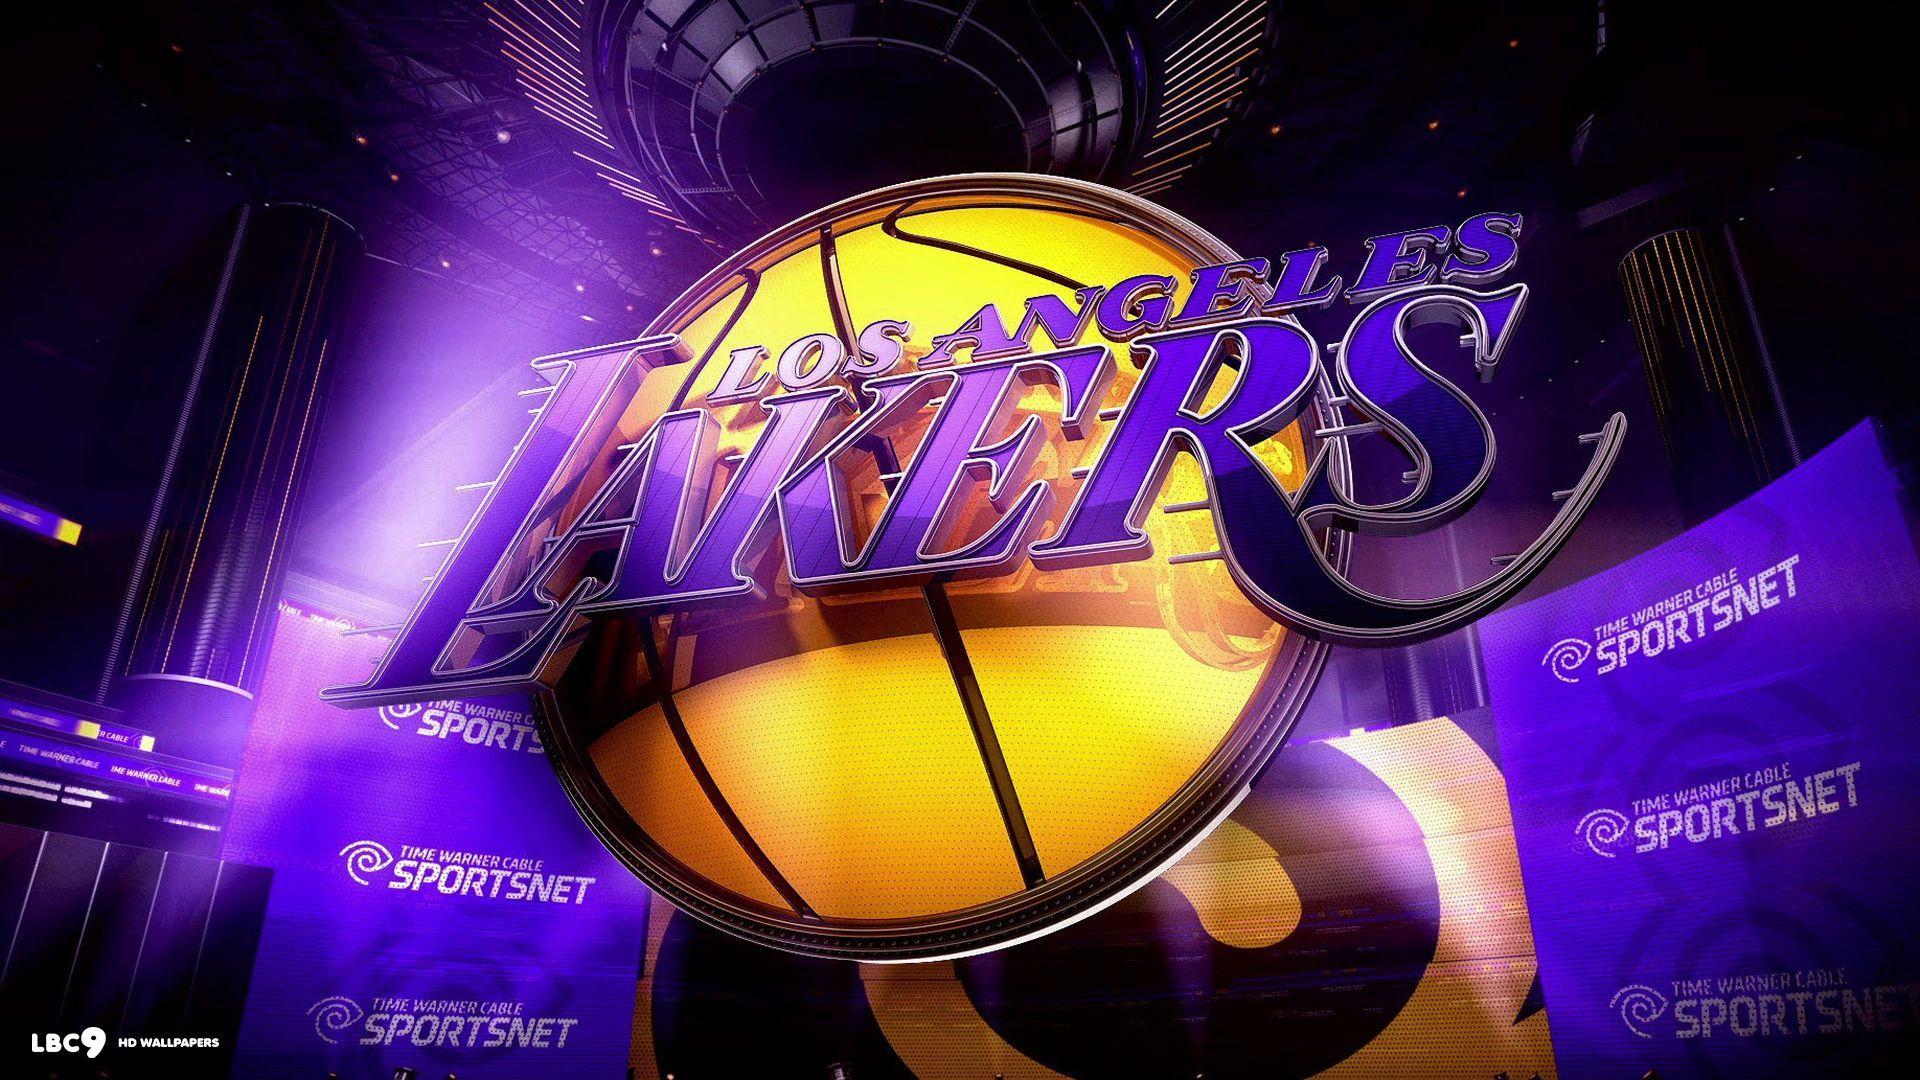 3D Lakers Wallpaper High Definition. Lakers wallpaper, Los